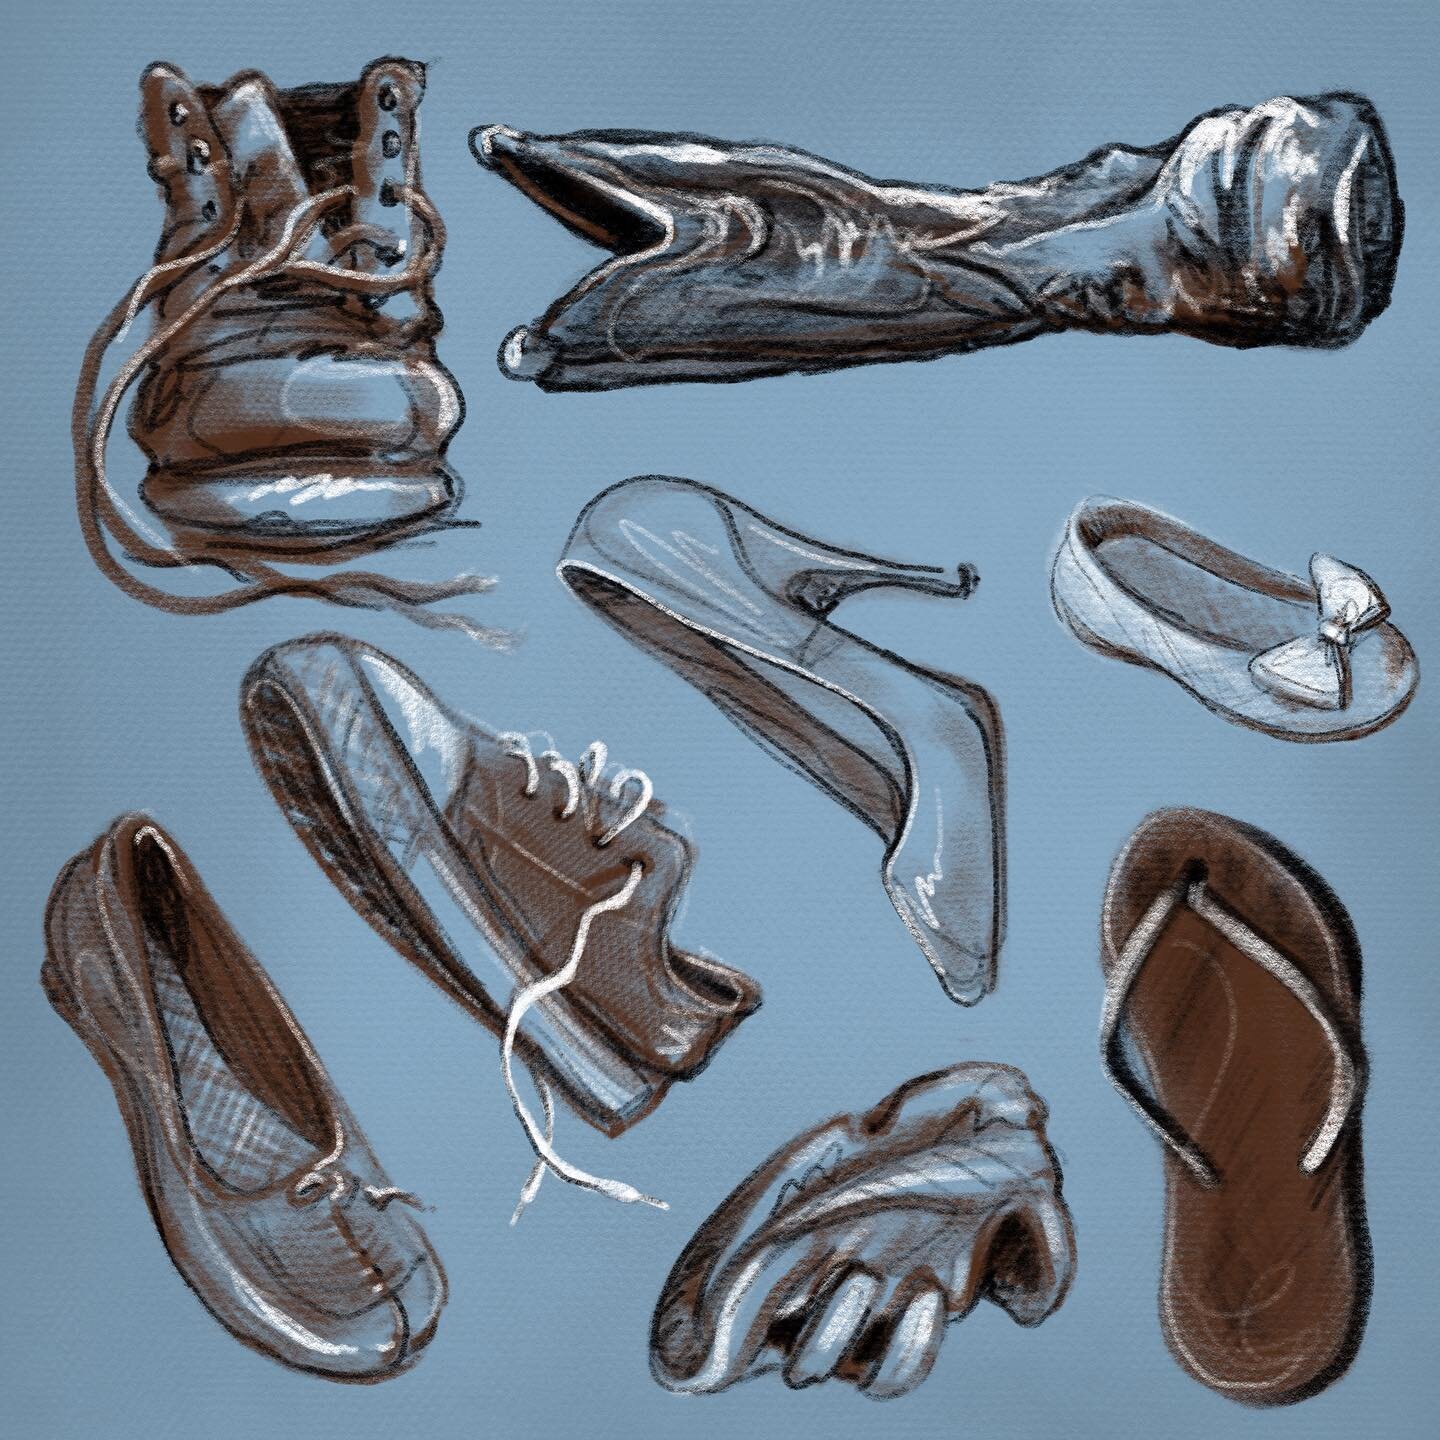 Shoes sketches
.
.
#inktober2020 #inktober #inktobershoes #inktoberday29 #shoes 
.
.
.
.
#inktober2020cicelycombs #illustration #illustrationoftheday #instaart  #procreate #procreateart #digitalart #illustragram #artoftheday #dailydrawing #dailyart #